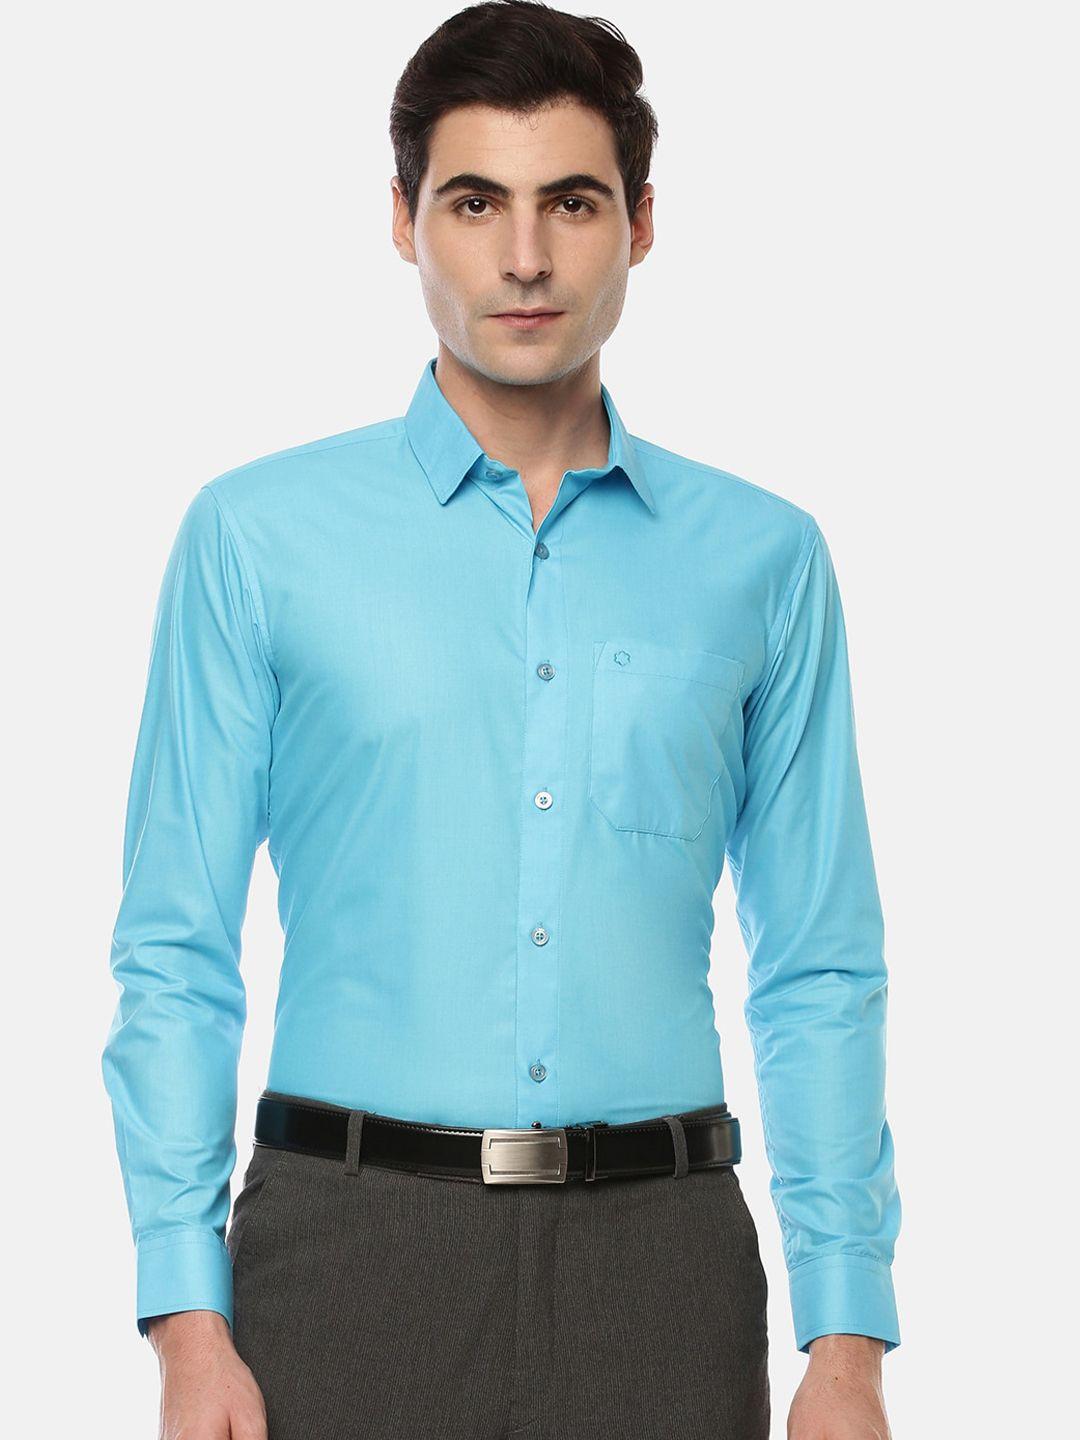 jansons men blue regular fit solid formal shirt